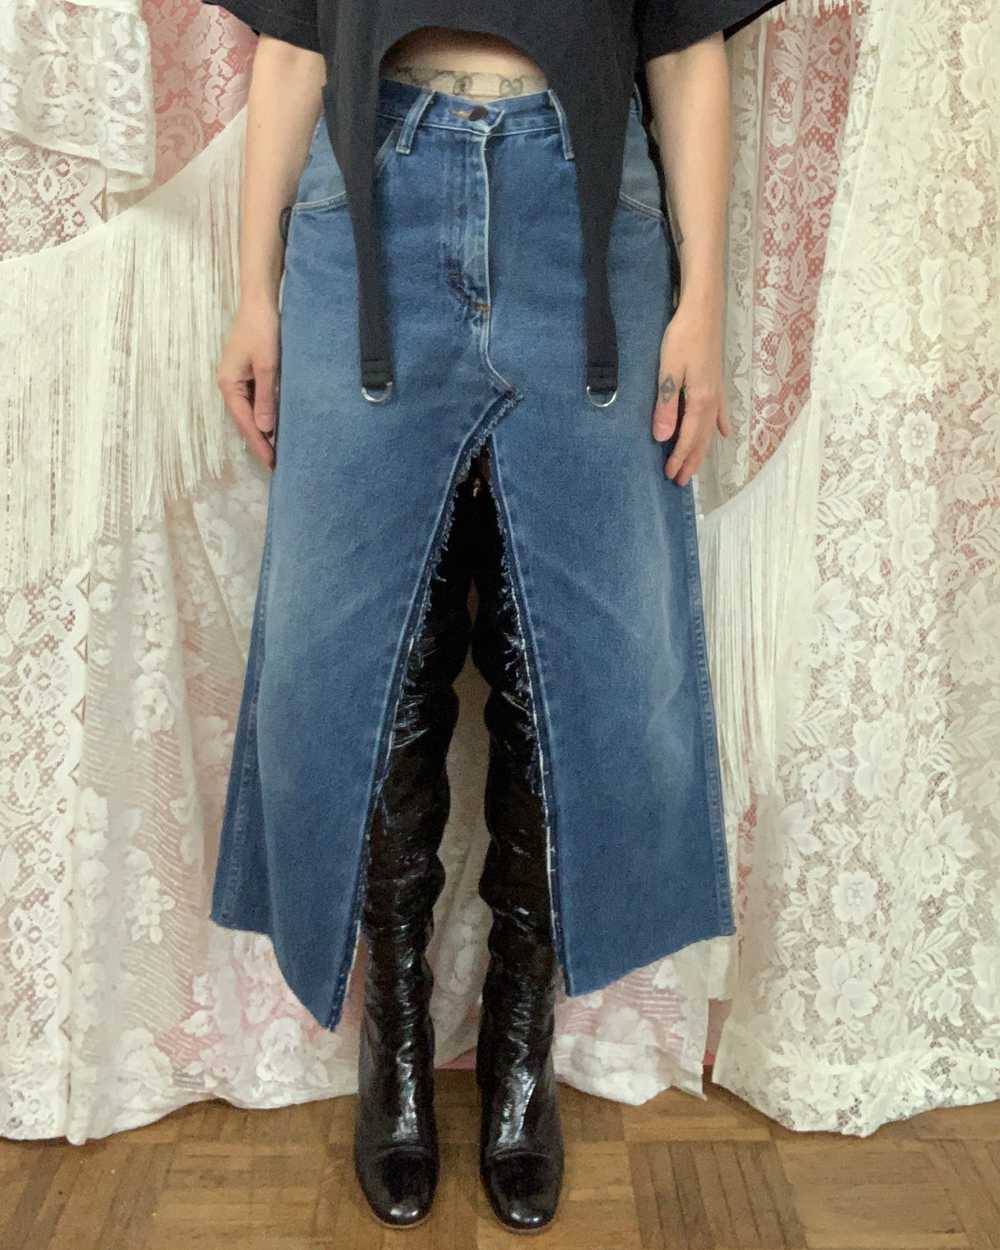 Custom transformed jean skirt - image 2